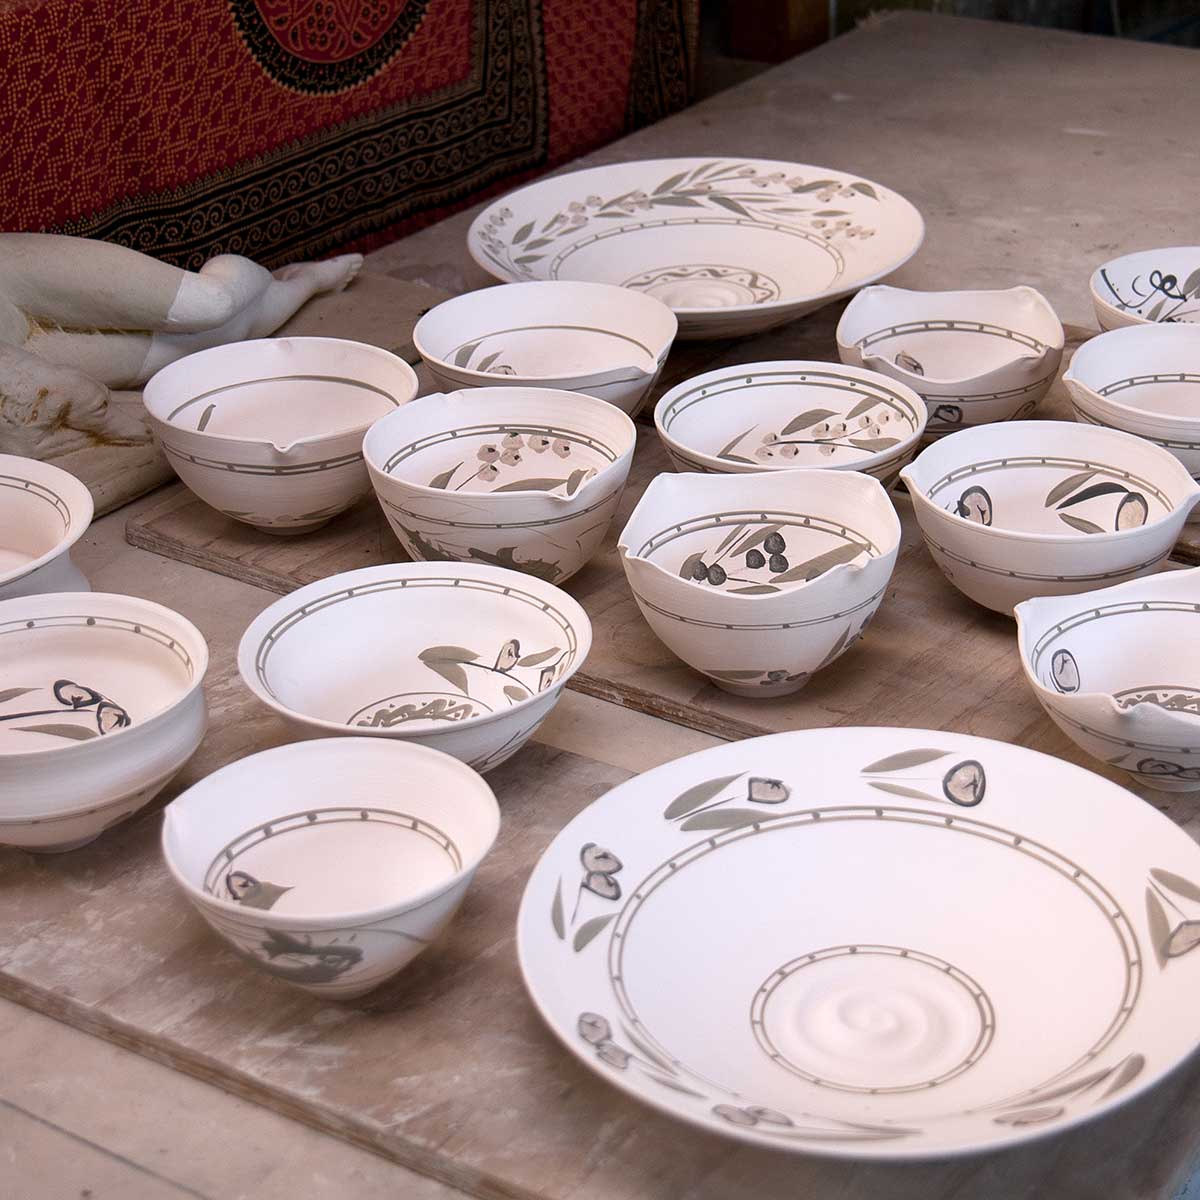 Tim's ceramics